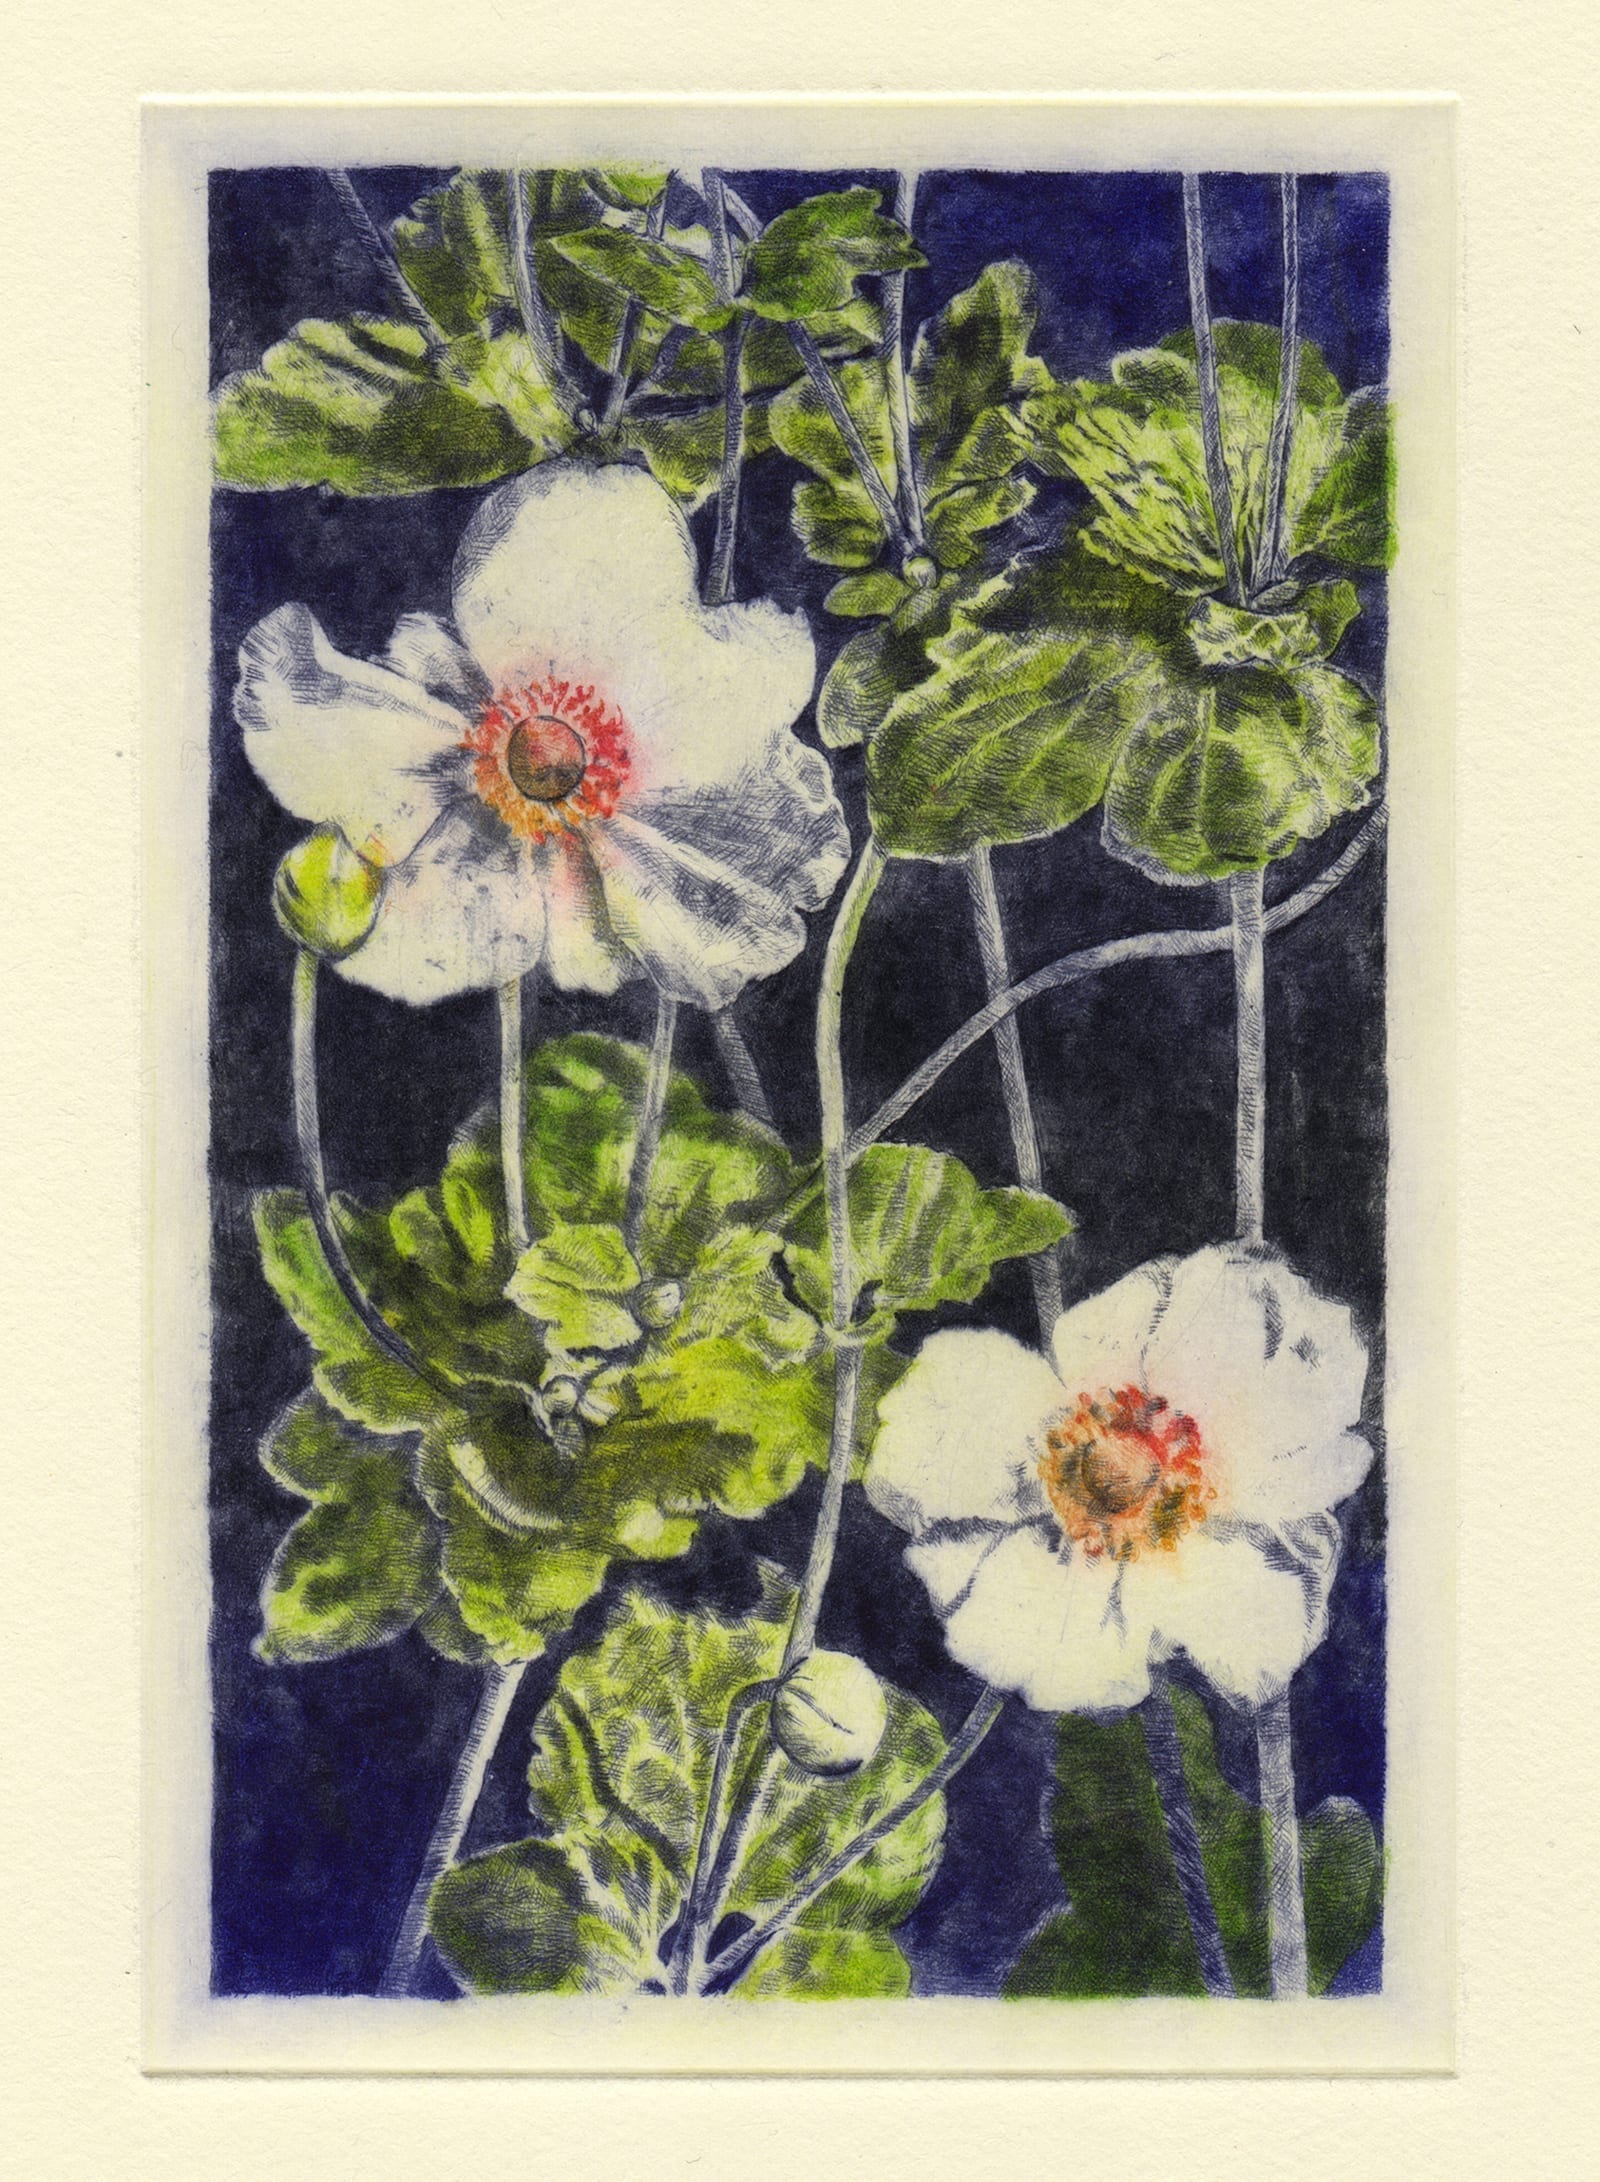 Japanese anemone (drypoint etching by Yaemi Shigyo)